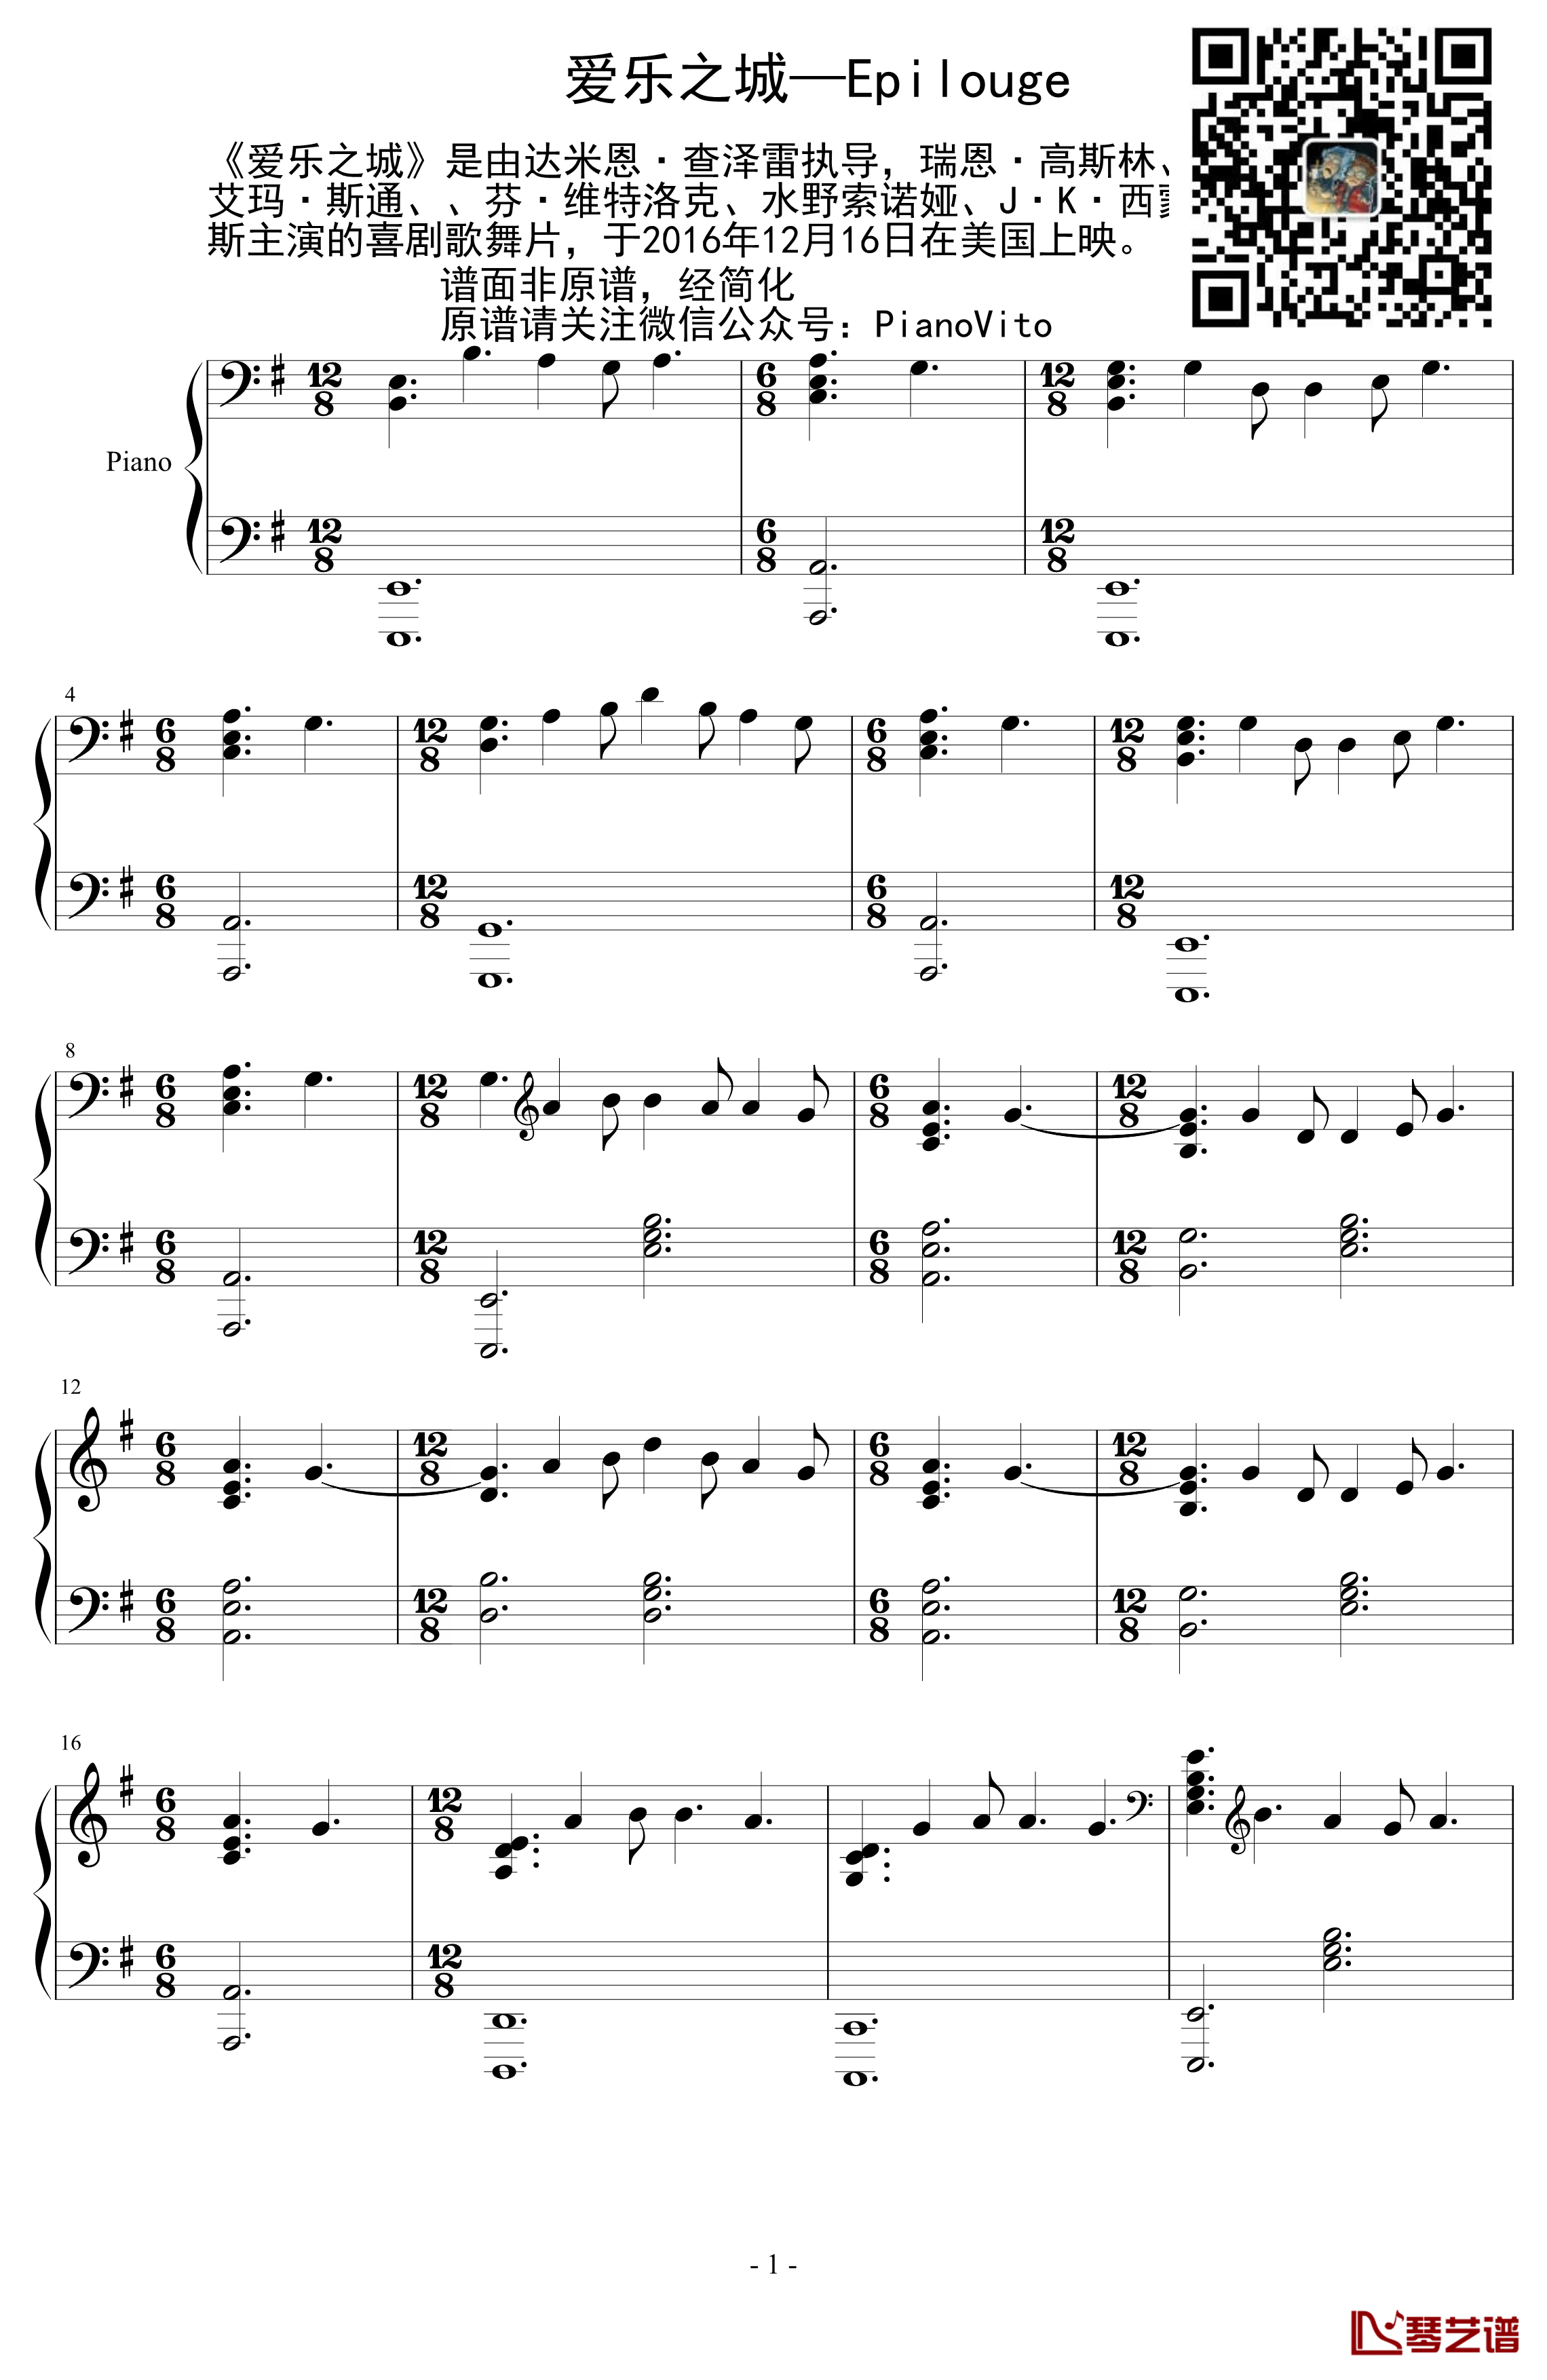 Second Waltz 钢琴谱-第二号华尔兹-La La Land1